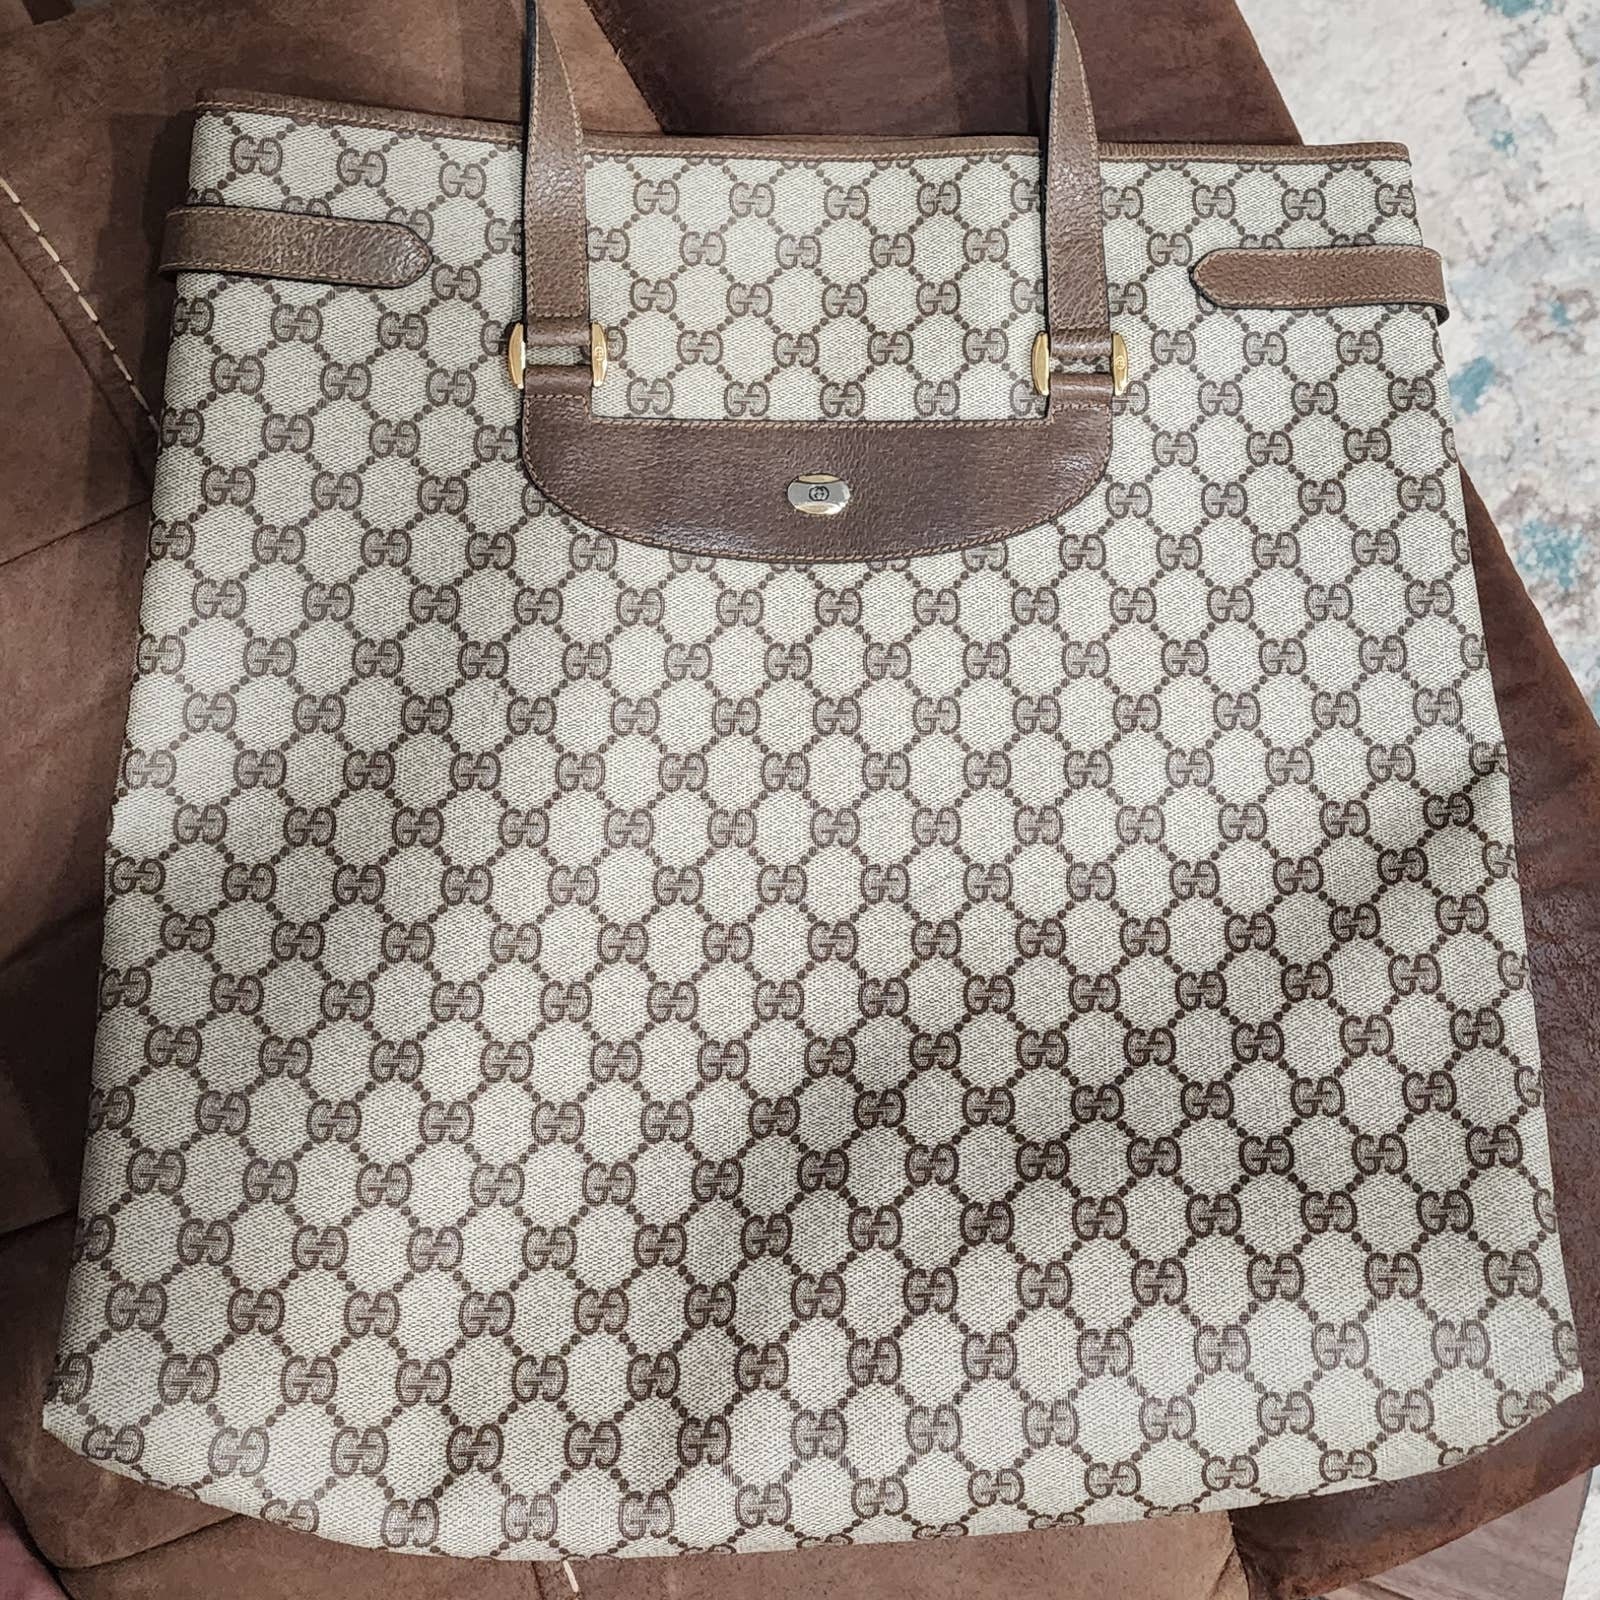 Gucci GG Monogram Briefcase Business Nylon Laptop Bag Brown Handbag Tote  190630